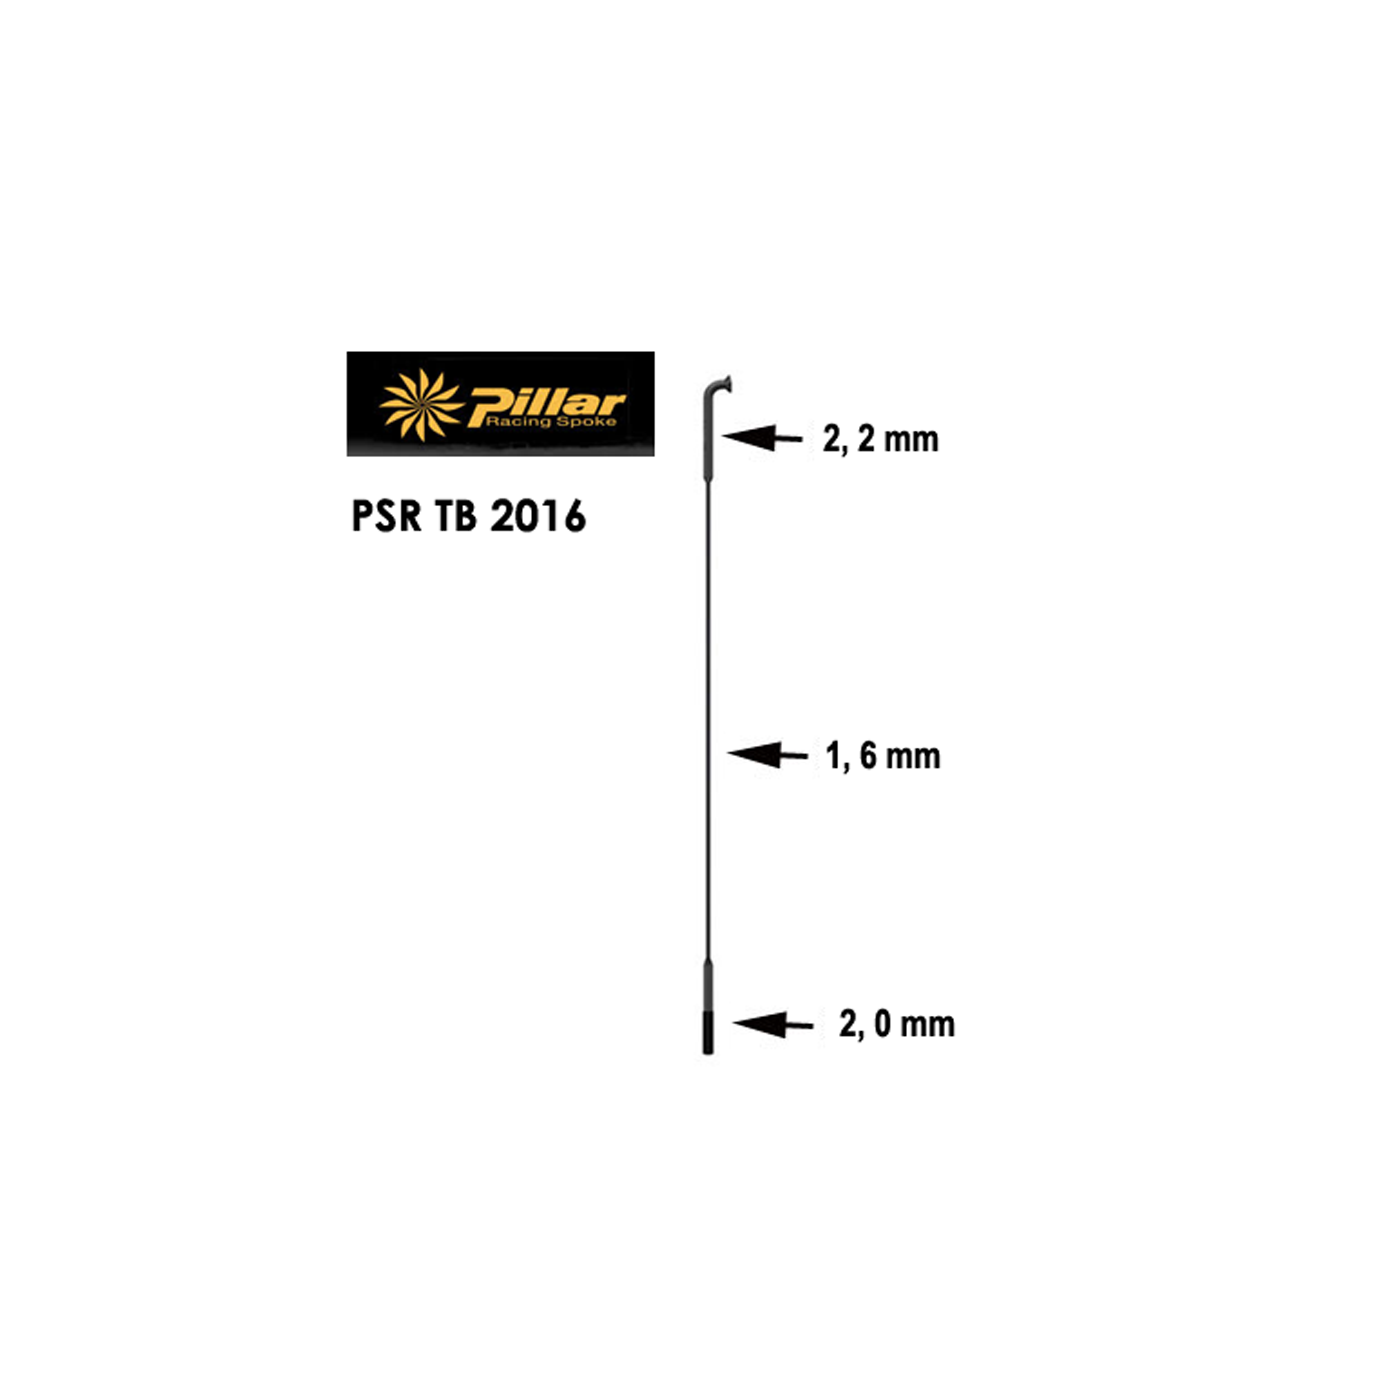 PILLAR RACING SPOKE PSRTB2016 JB, BLK 1,6MM 259MM UNTHREADED